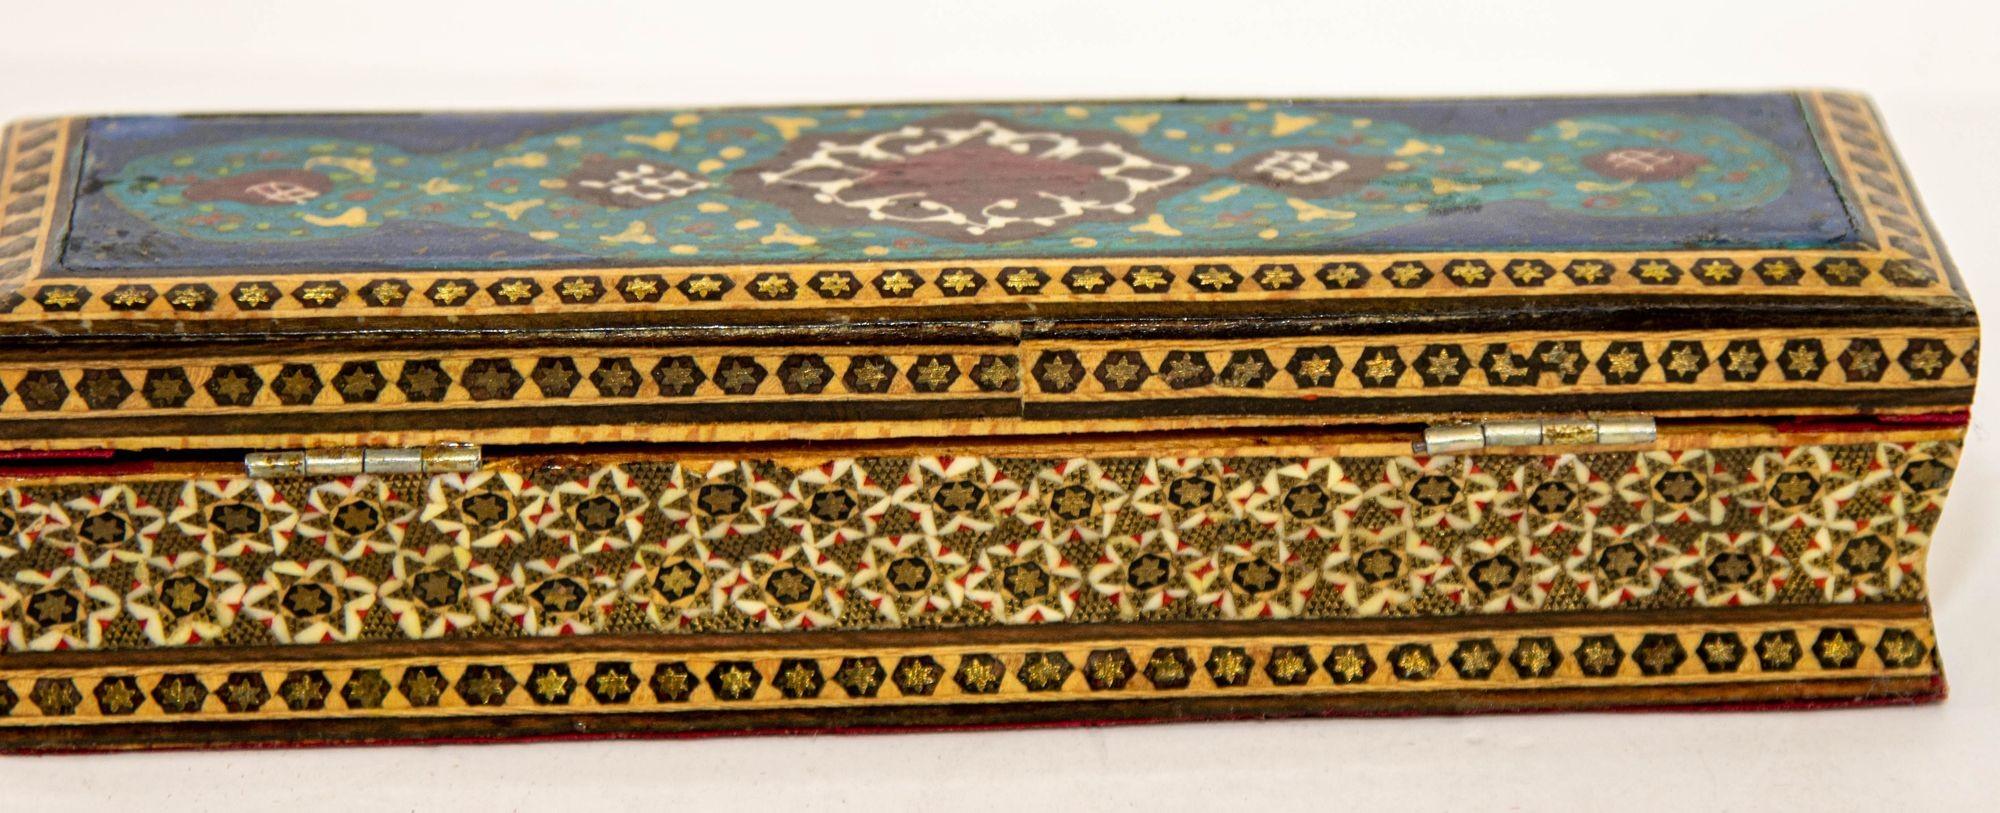 20th Century Micro Mosaic Moorish Inlaid Jewelry Pen Box For Sale